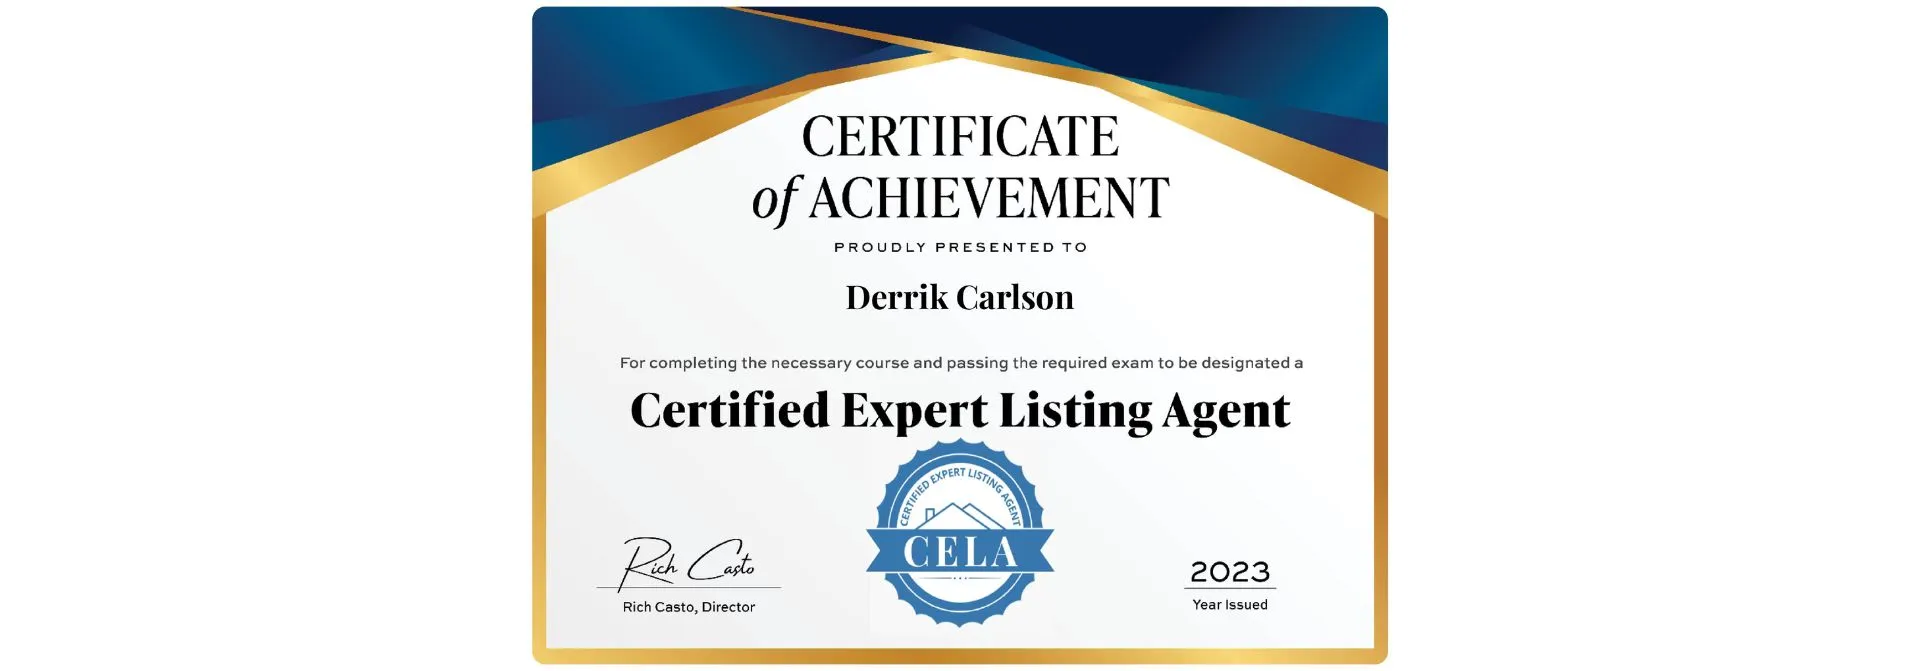 Certificate of Achievement for Derrik Carlson as a Certified Expert Listing Expert